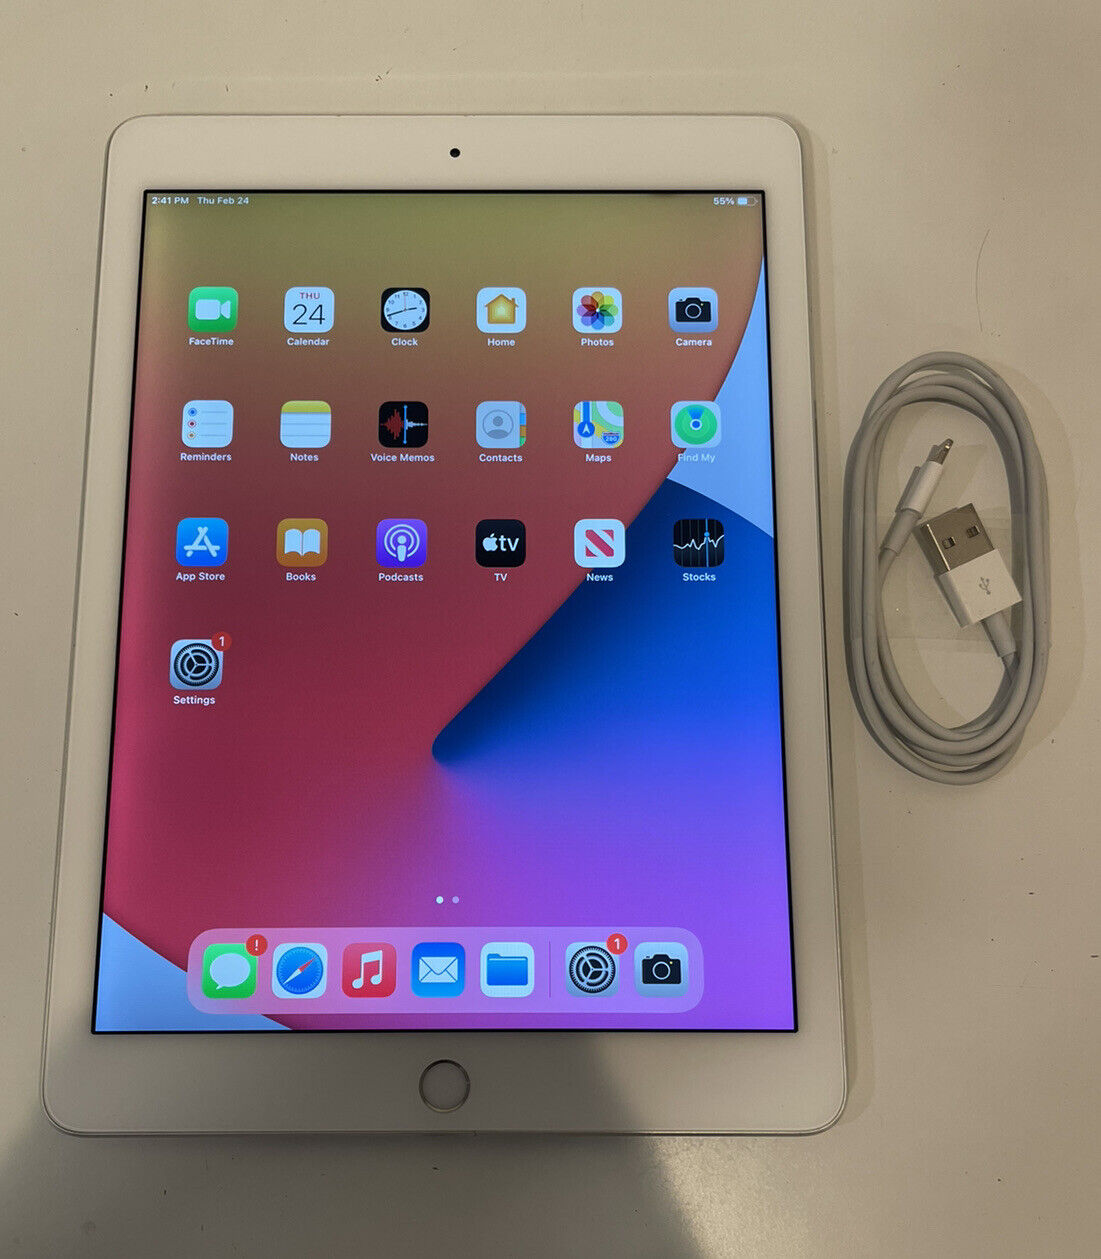 Apple iPad Air 2 128GB, Wi-Fi, 9.7in - Silver for sale online | eBay